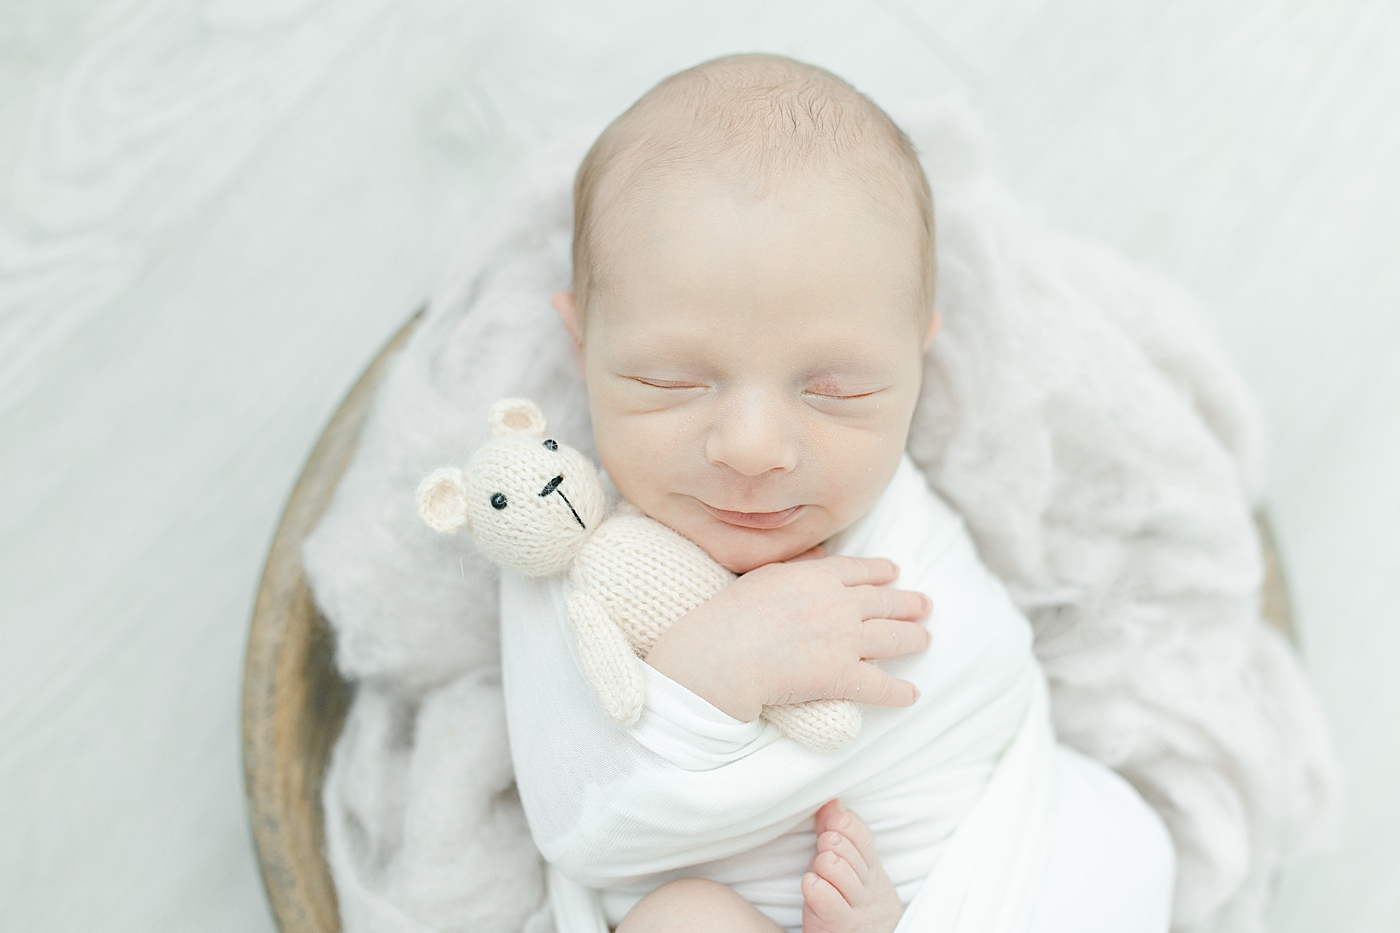 Newborn baby boy in white swaddle snuggling stuffed bear | Photo by Little Sunshine Photography